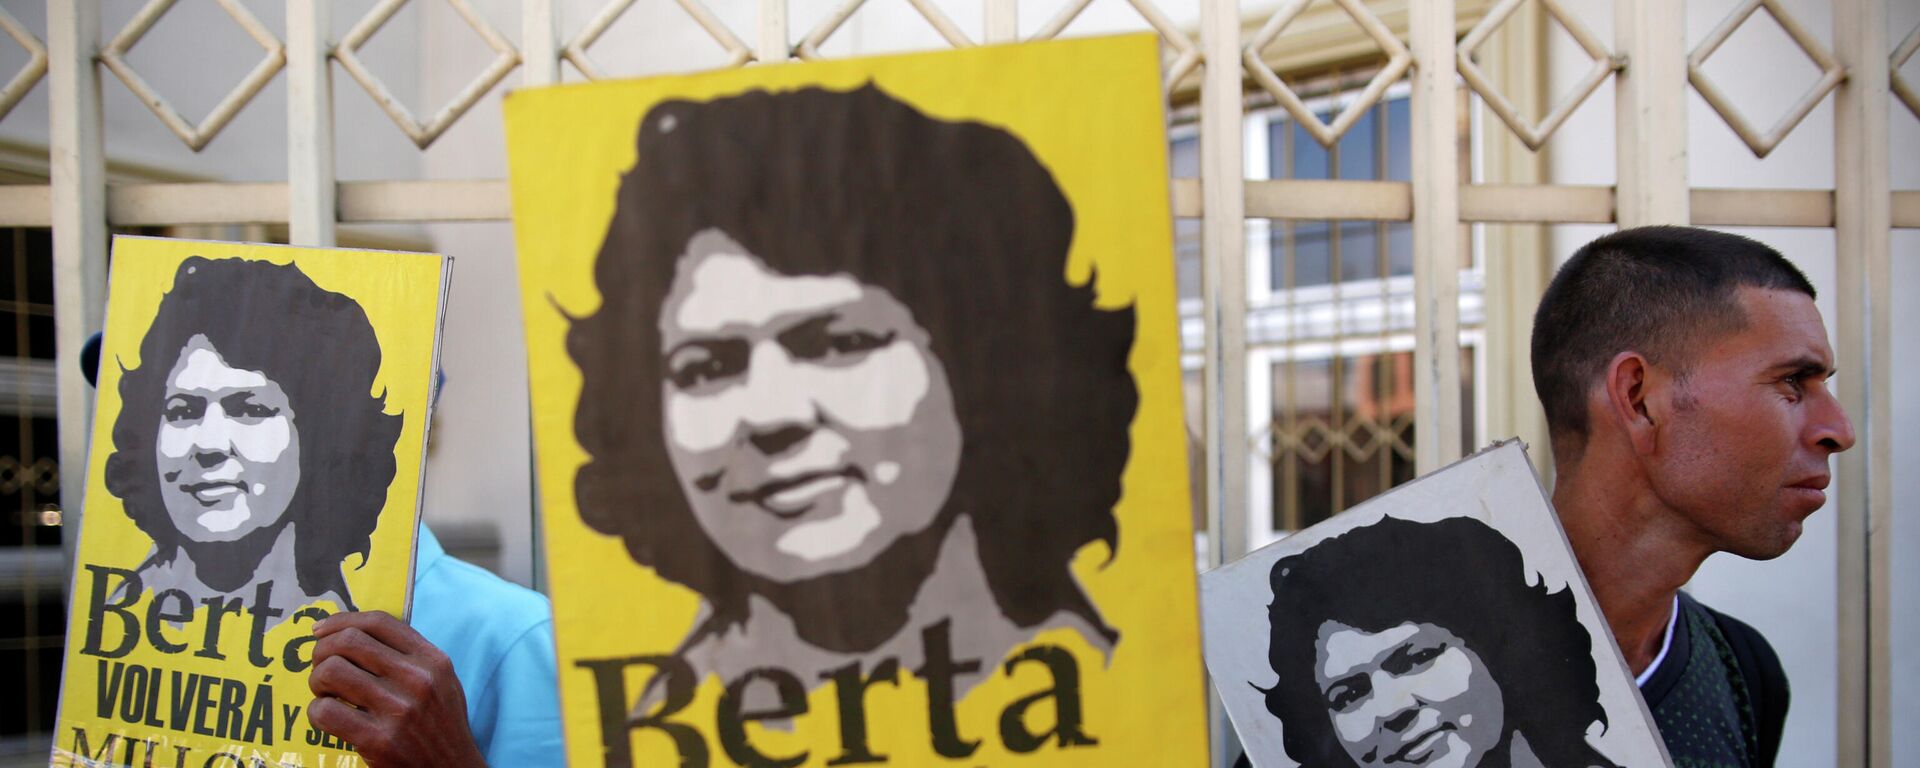 Pancartas con la imagen de Berta Cáceres - Sputnik Mundo, 1920, 02.03.2021